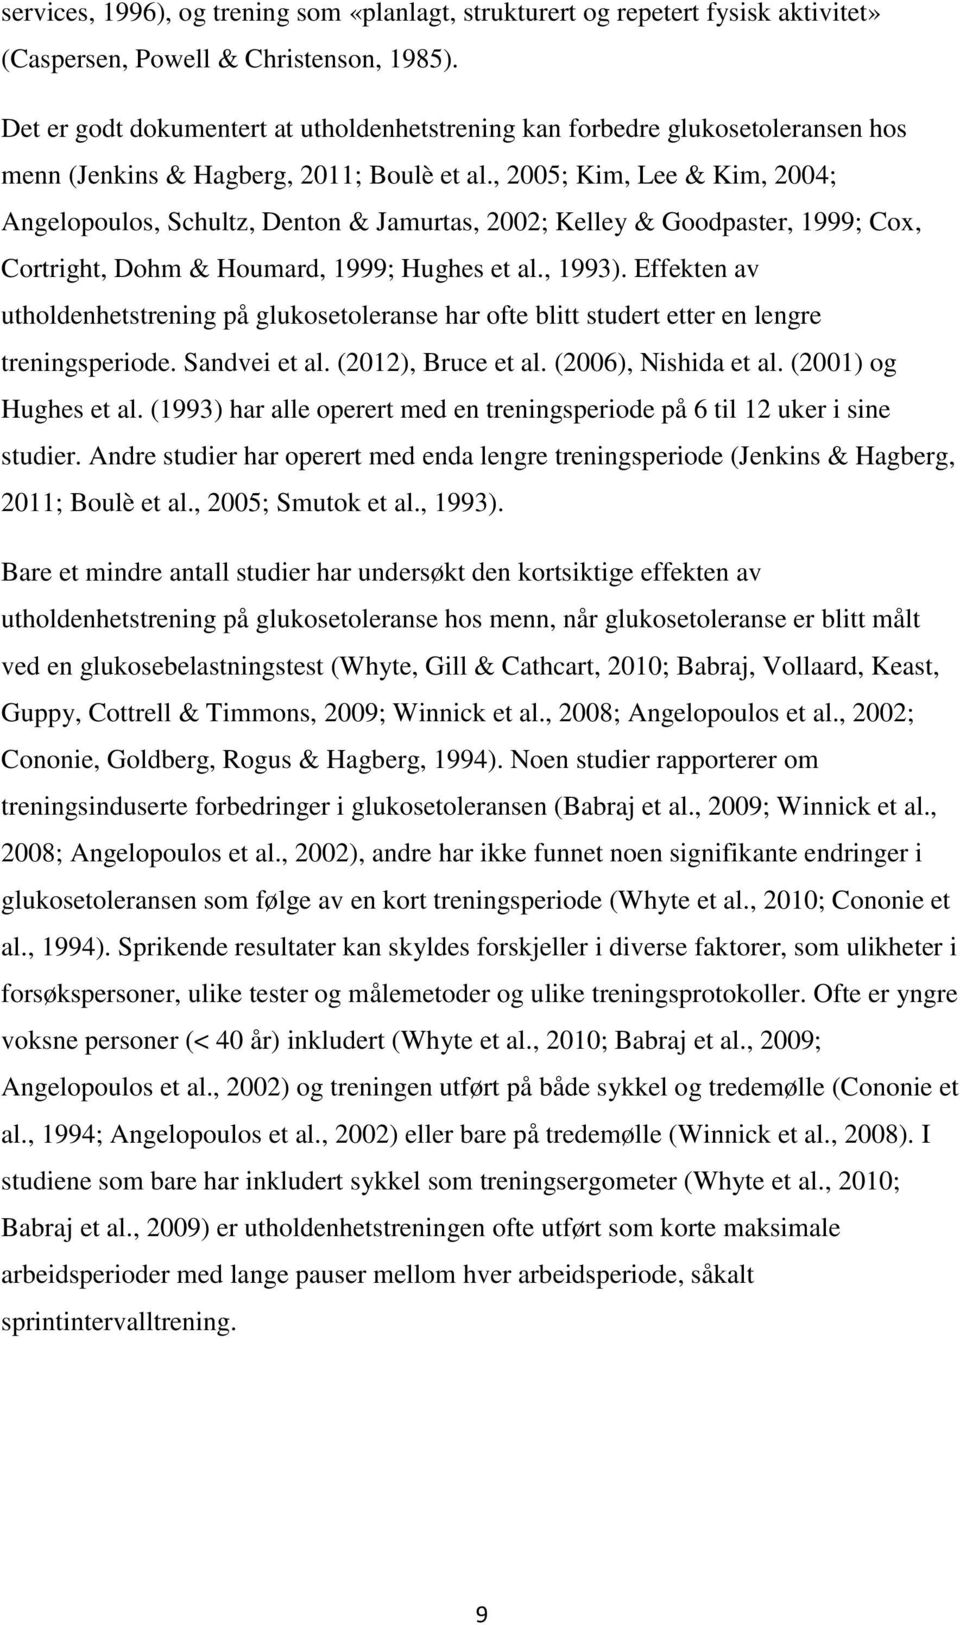 , 2005; Kim, Lee & Kim, 2004; Angelopoulos, Schultz, Denton & Jamurtas, 2002; Kelley & Goodpaster, 1999; Cox, Cortright, Dohm & Houmard, 1999; Hughes et al., 1993).